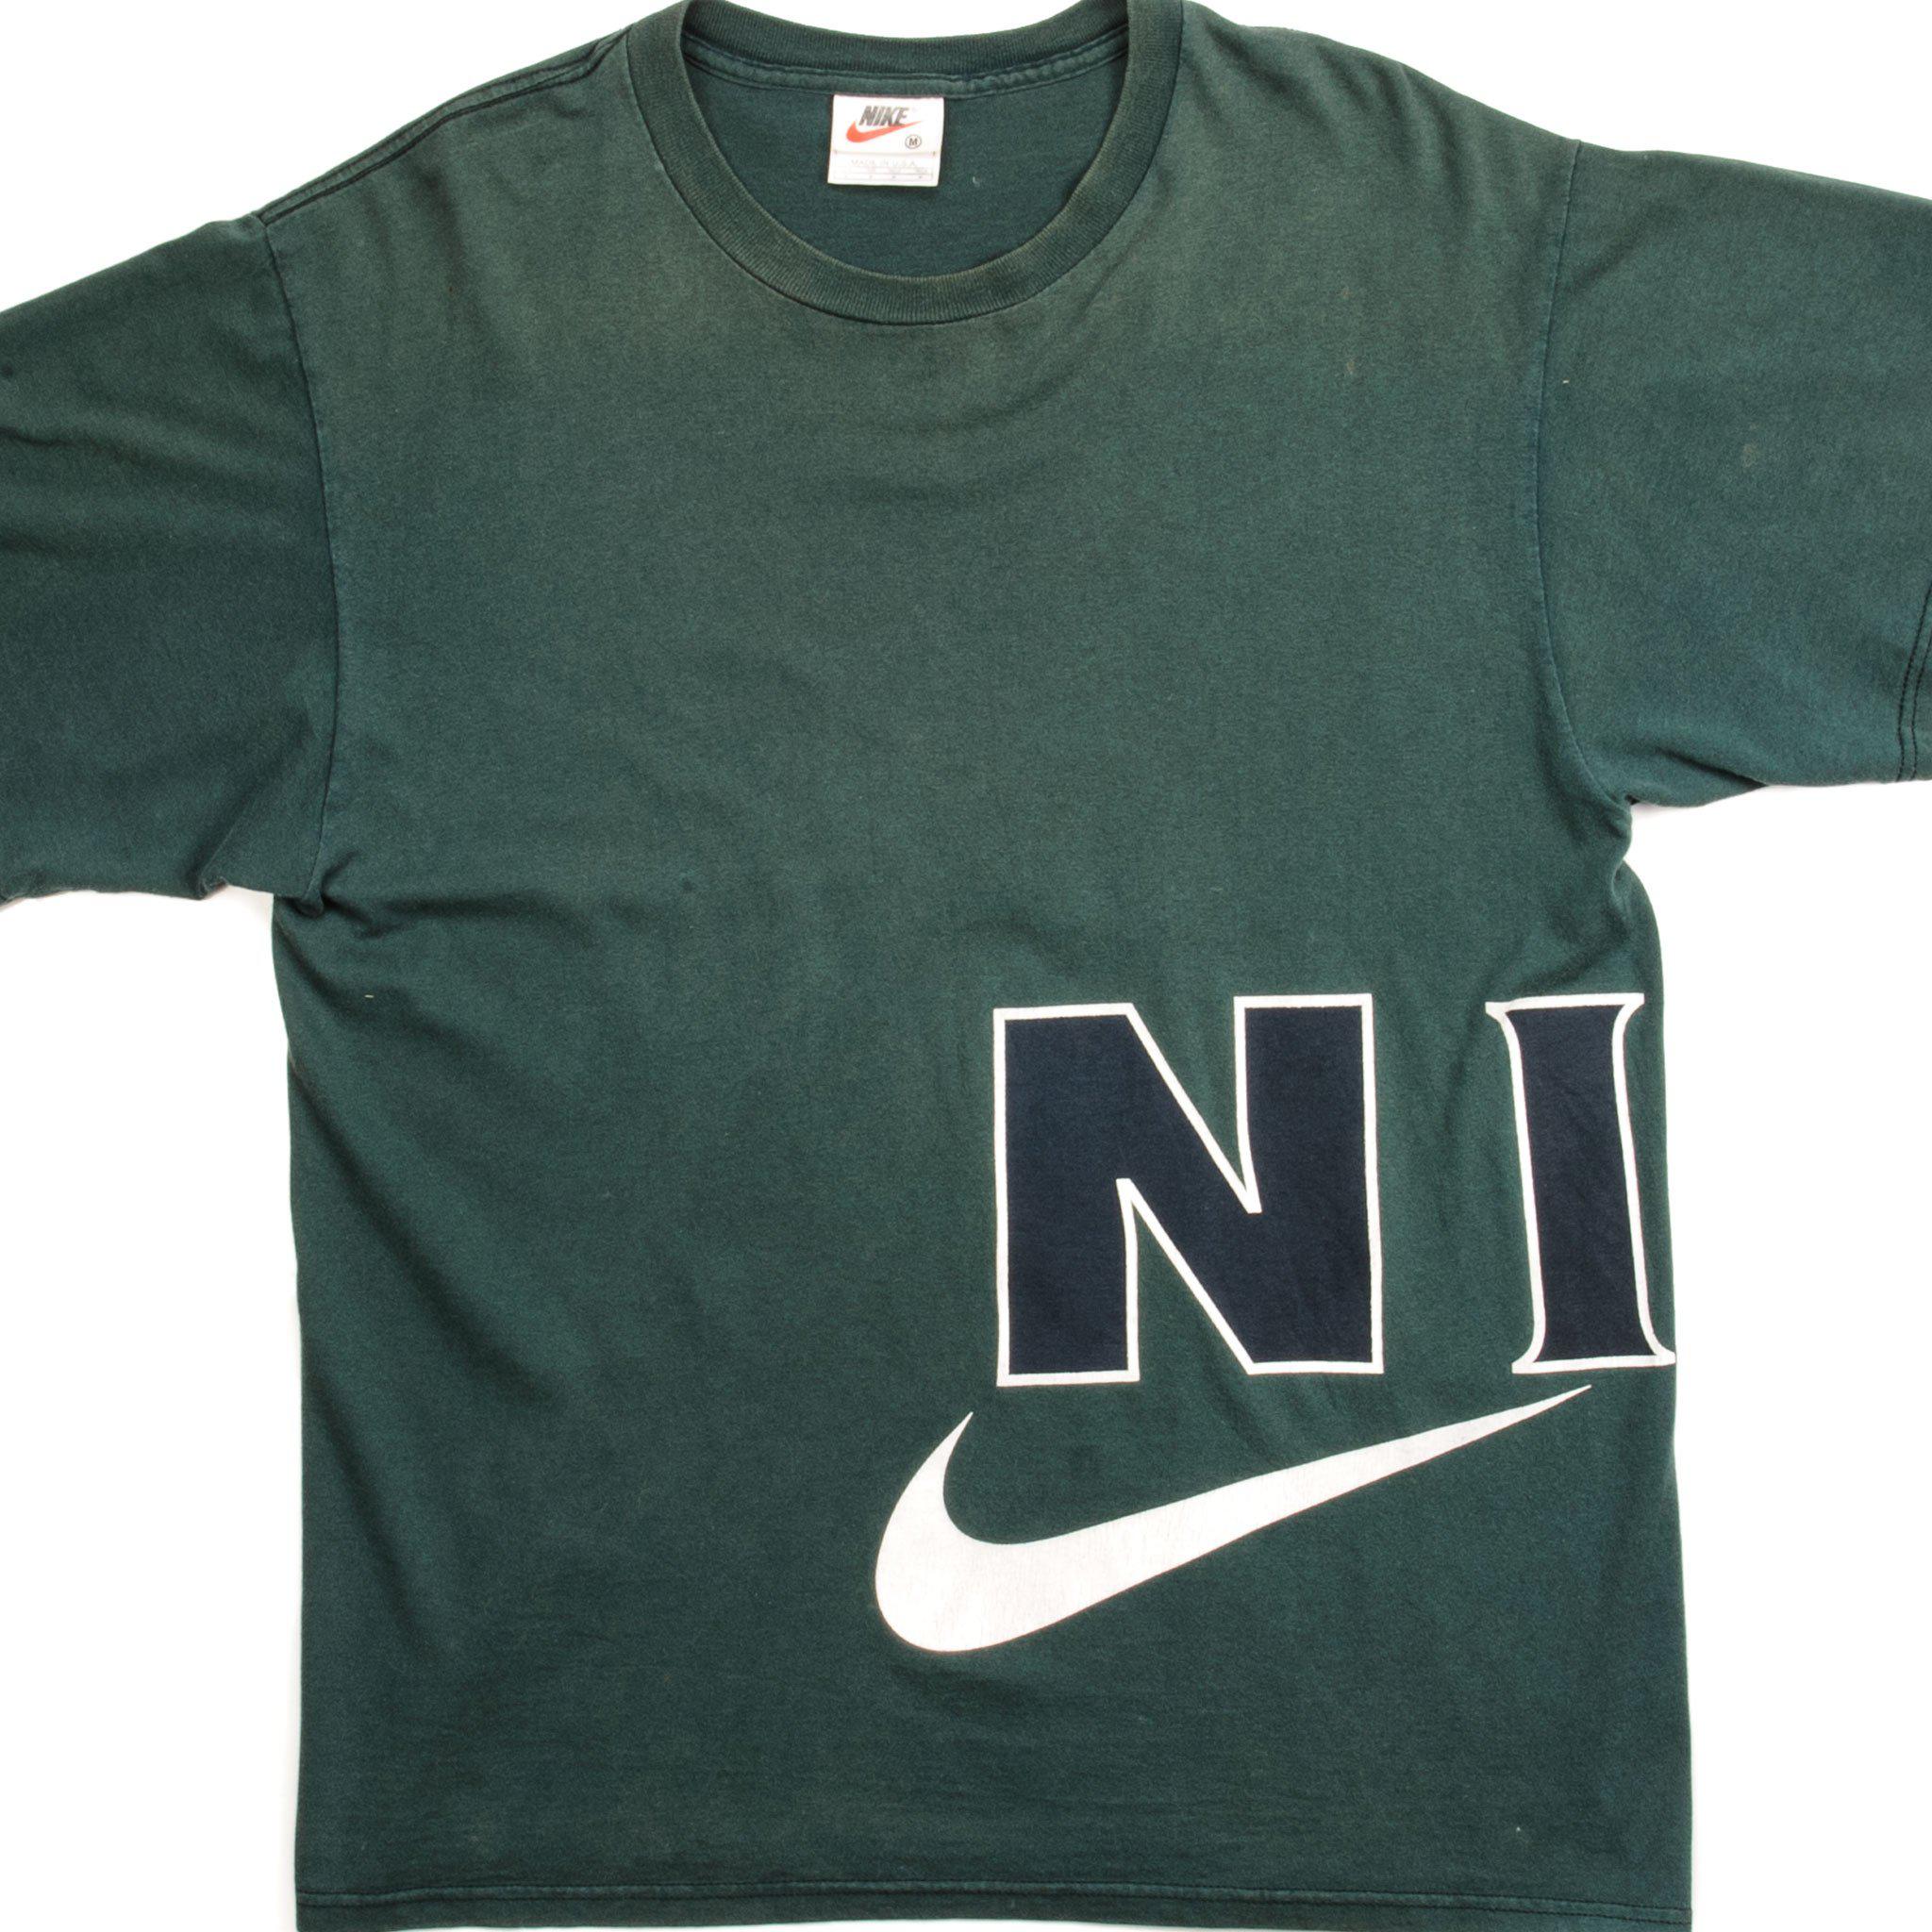 Vintage Nike Shirt End Size Medium Made USA – Vintage rare usa